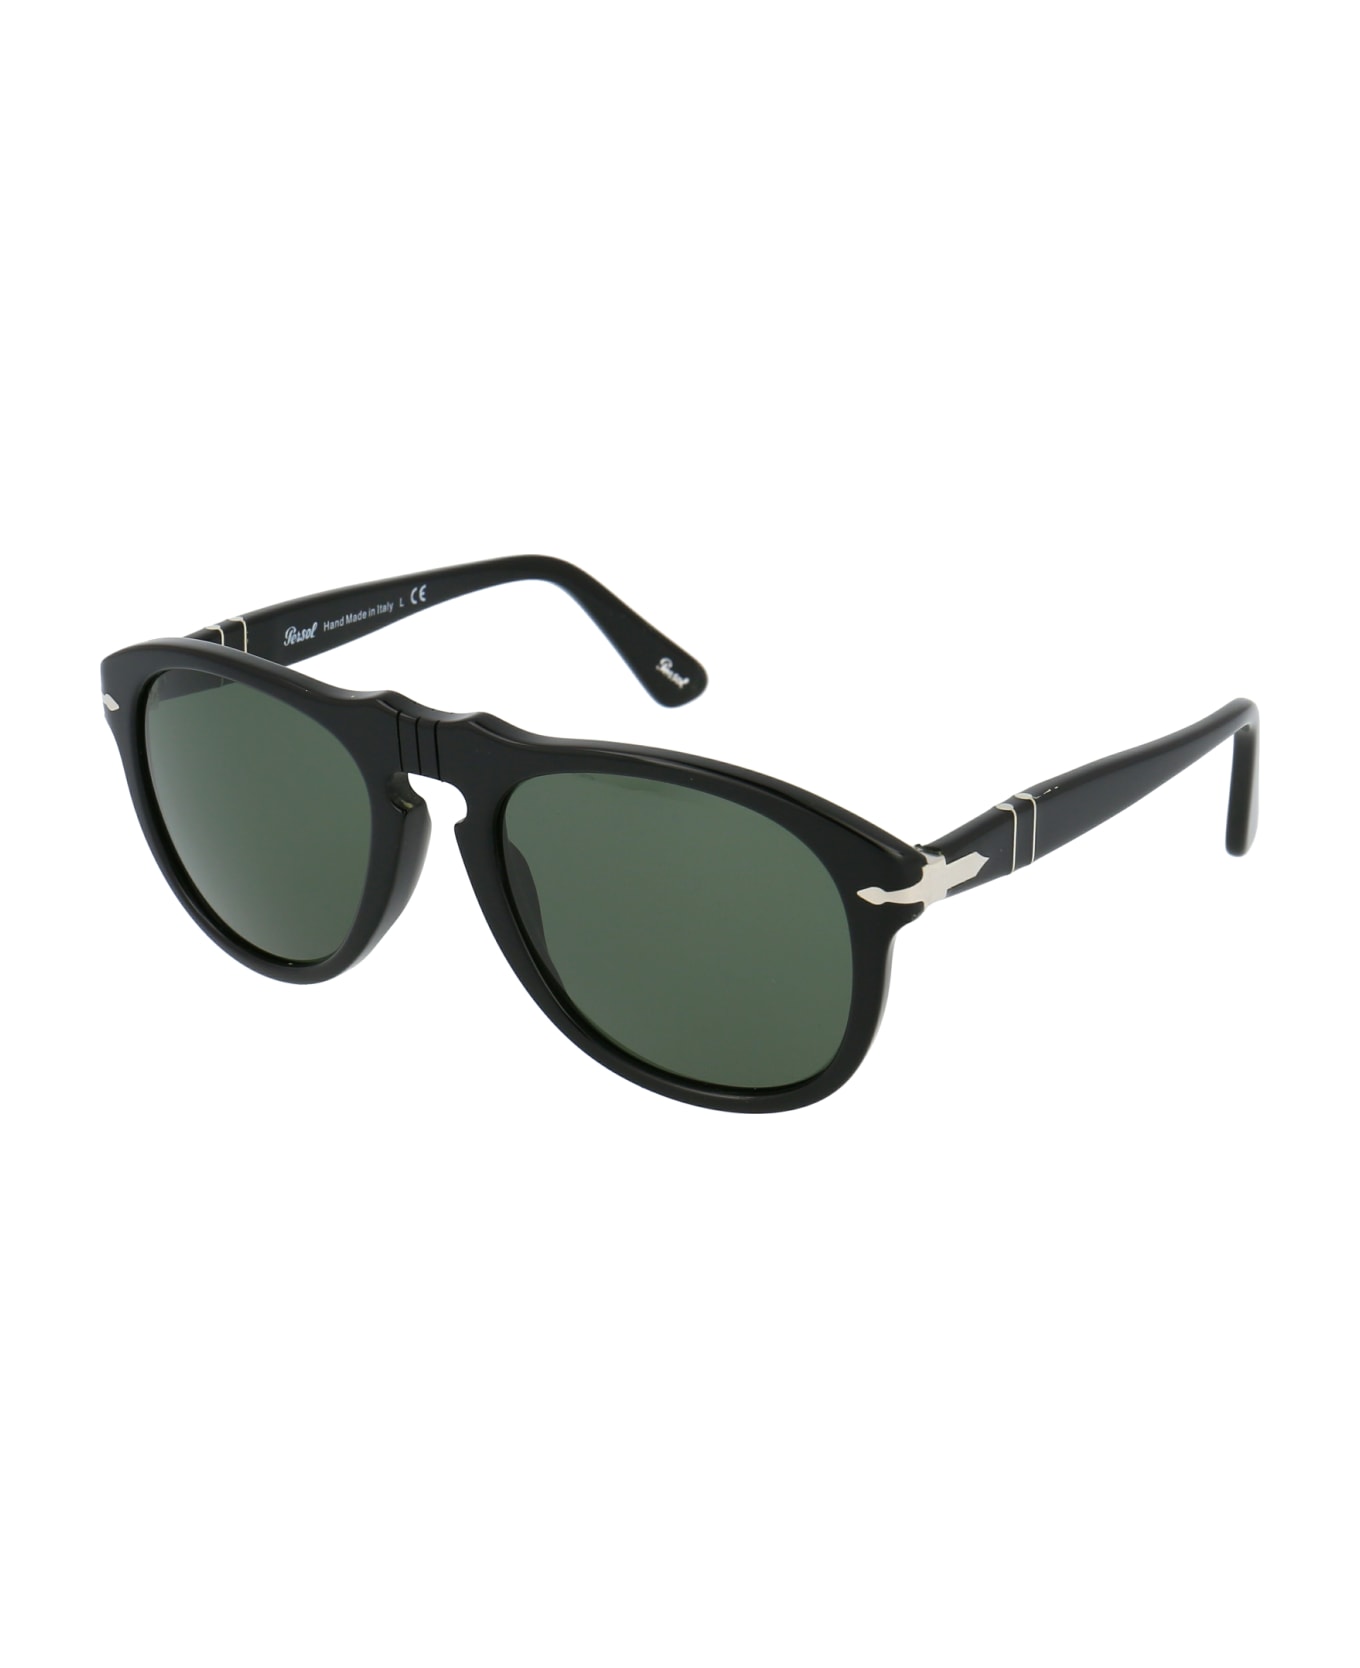 Persol 0po0649 Sunglasses - 95/31 BLACK サングラス